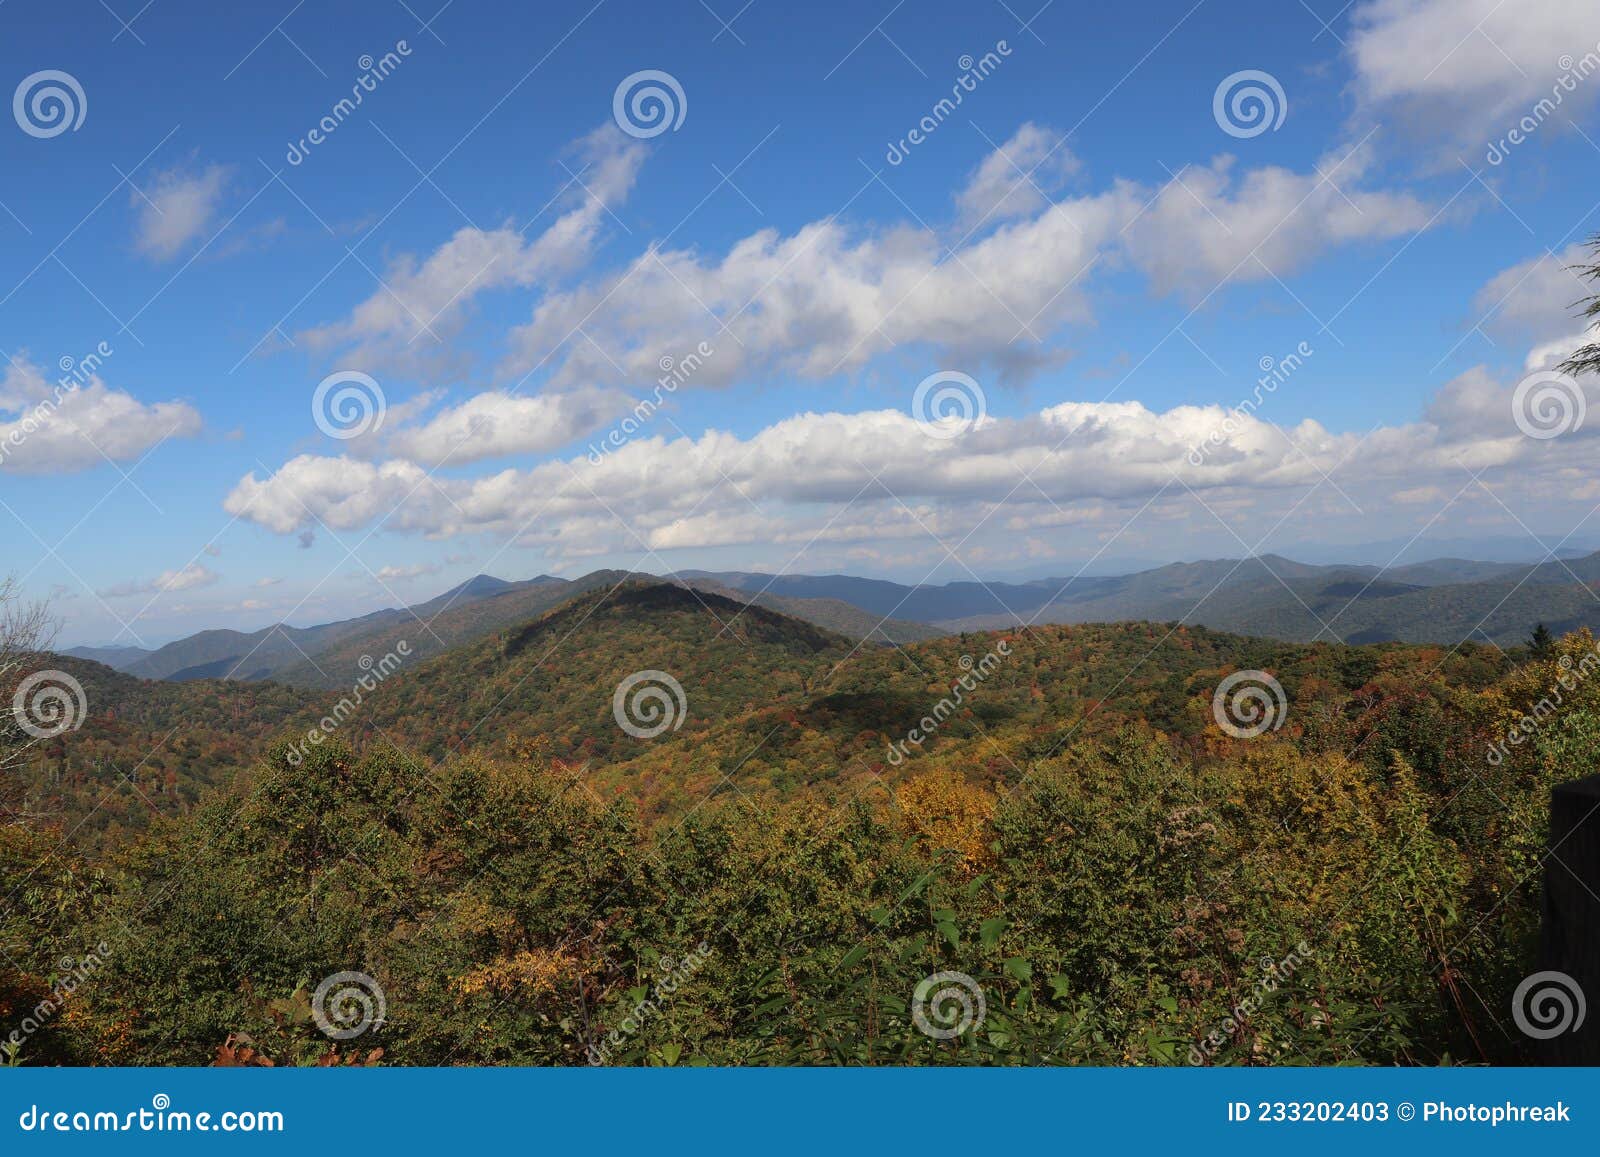 blue ridge mountians in fall season